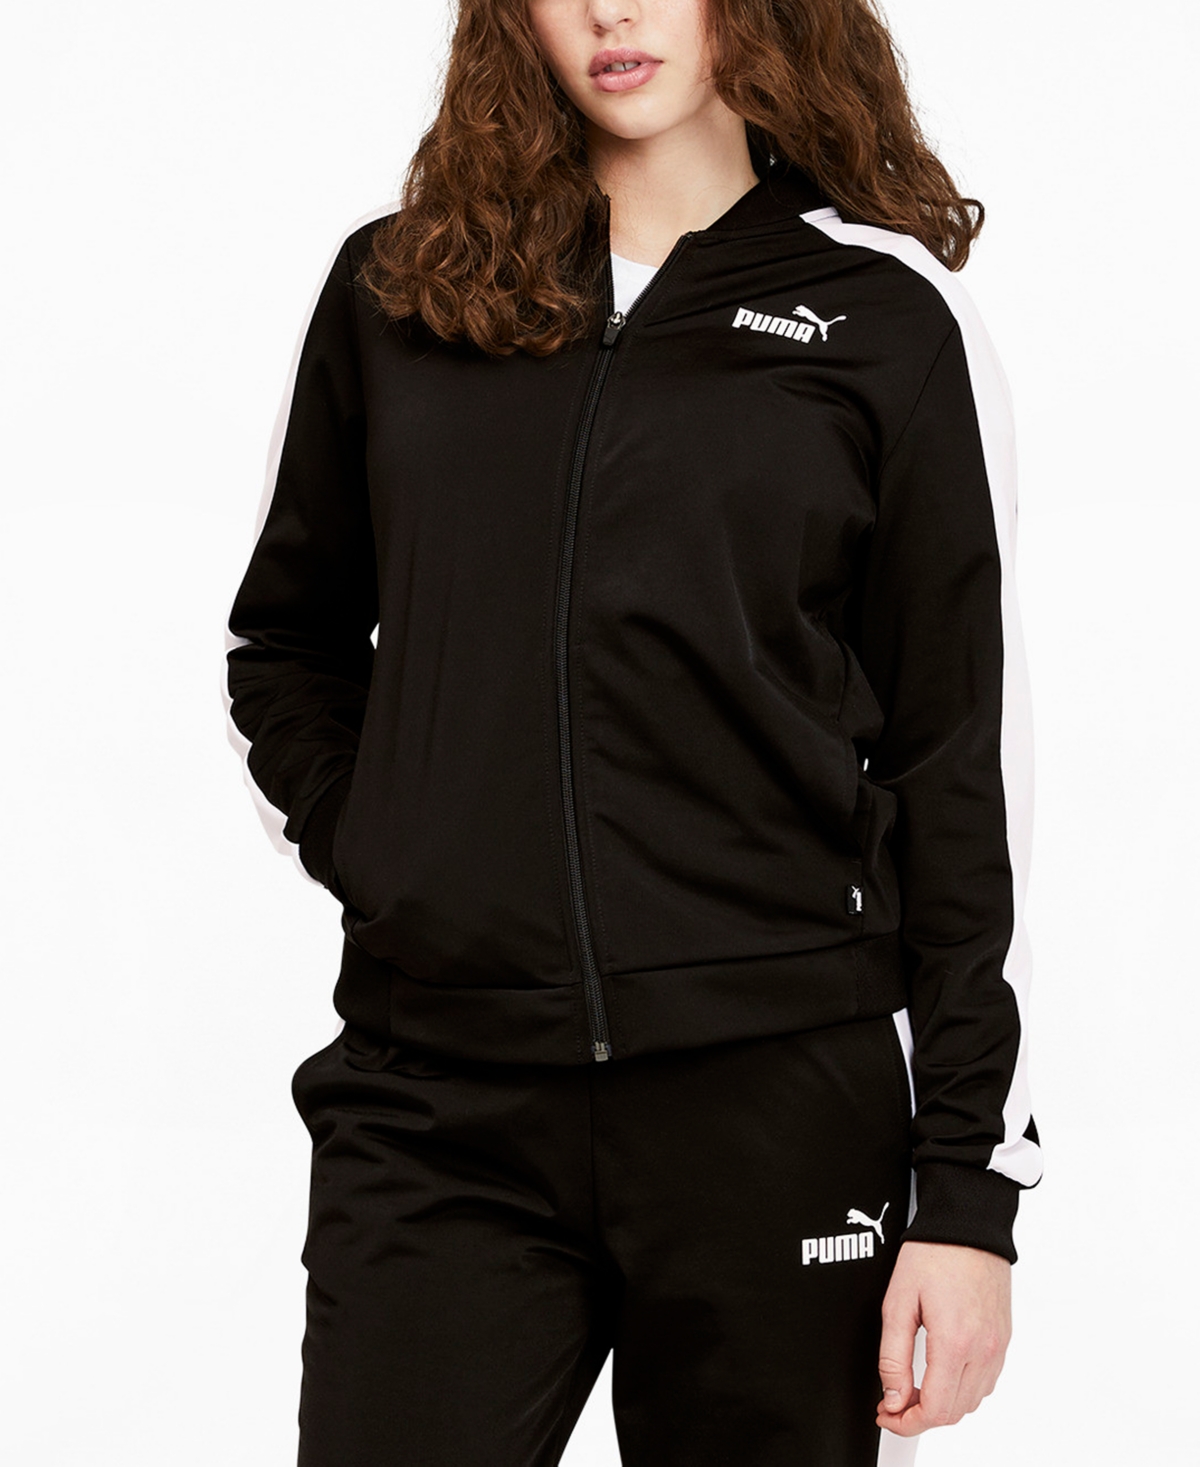 Puma Women's Iconic T7 Women's Track Jacket